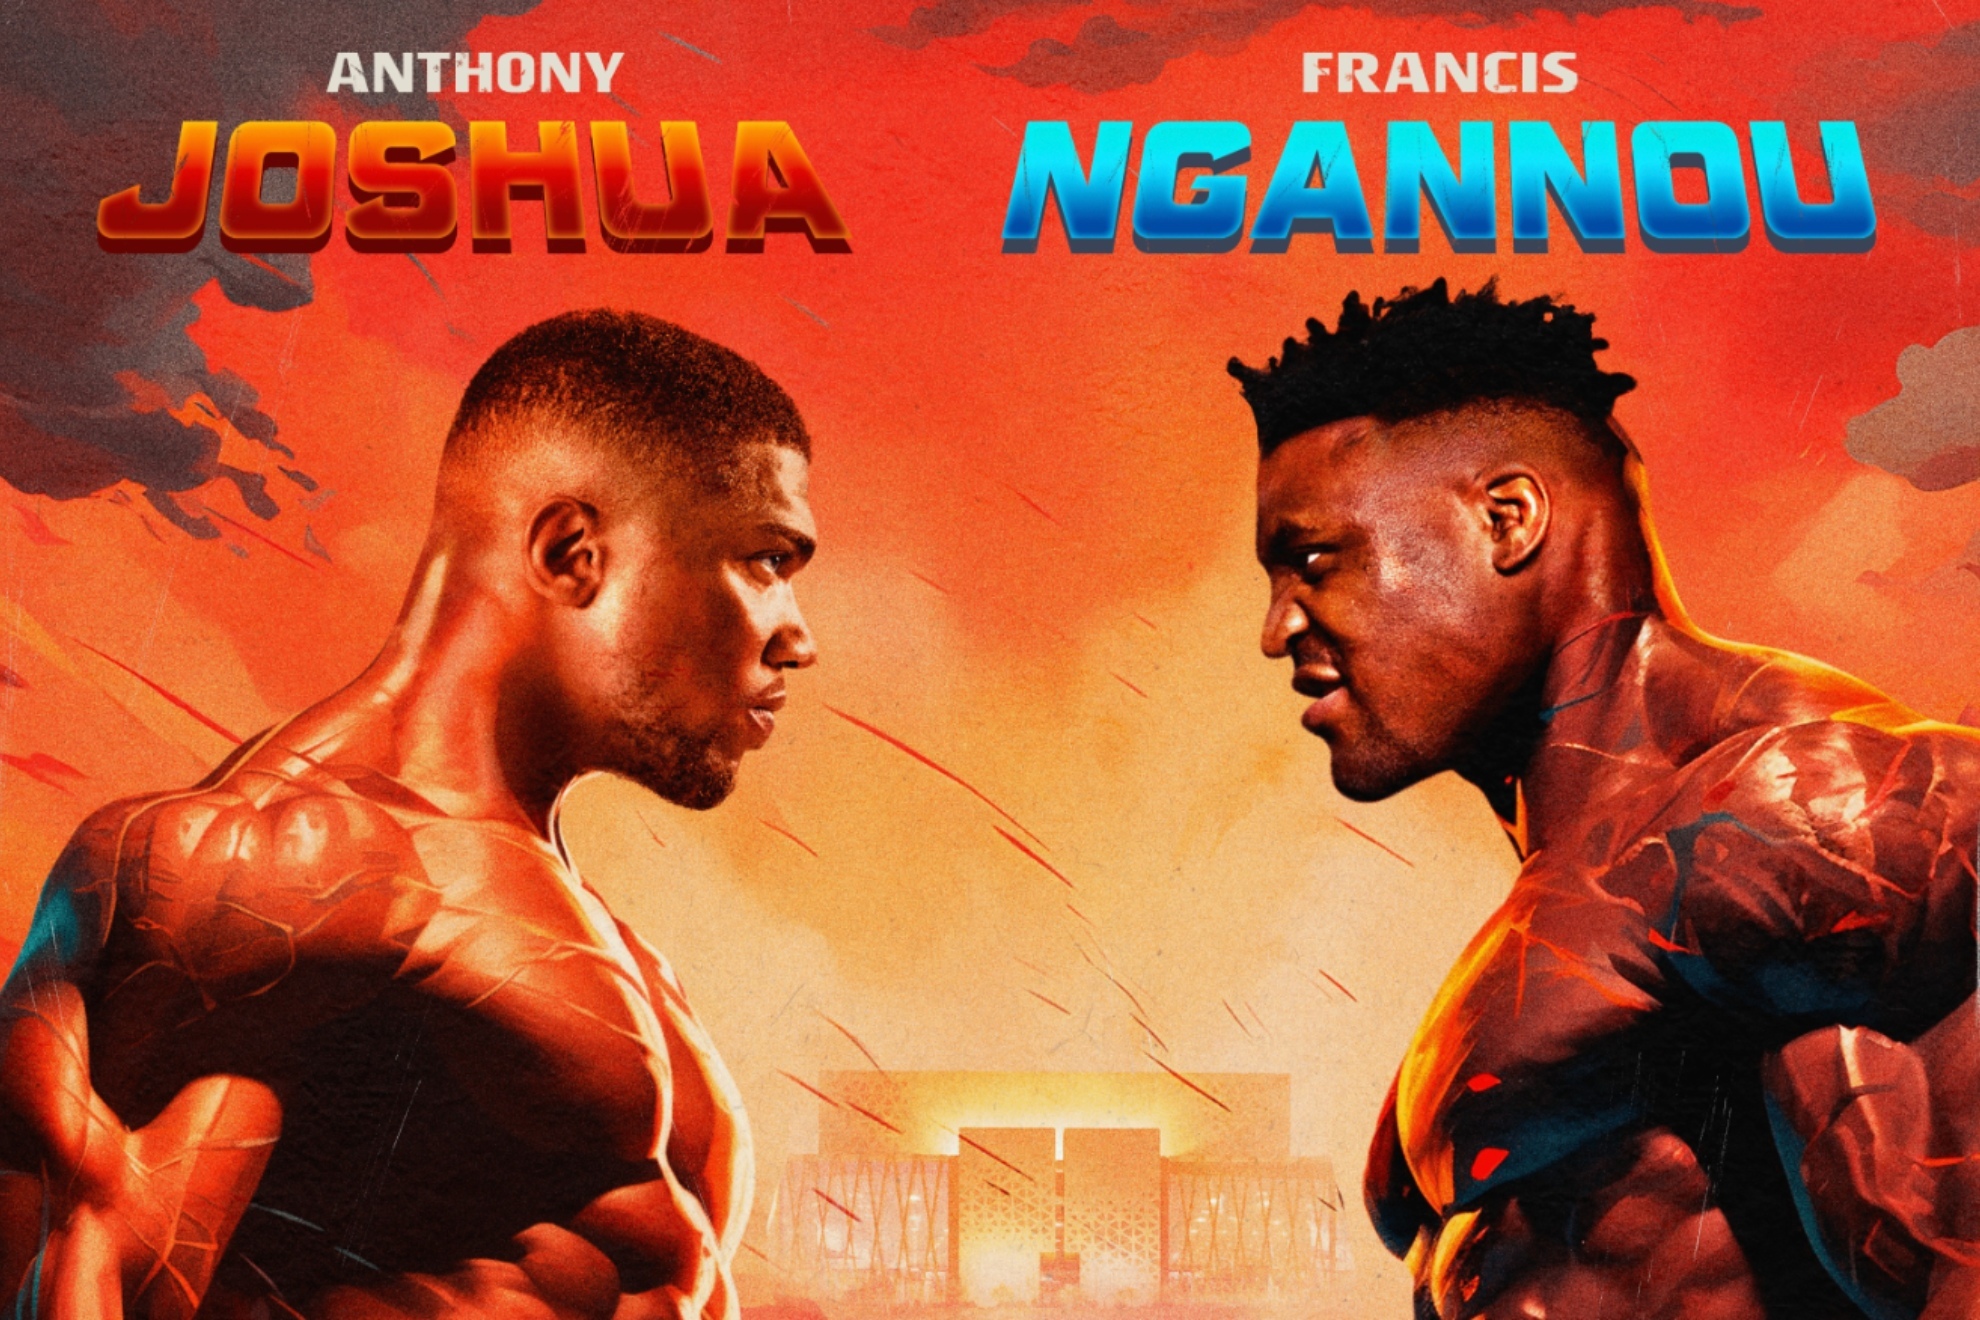 Joshua vs Ngannou poster for Match 8